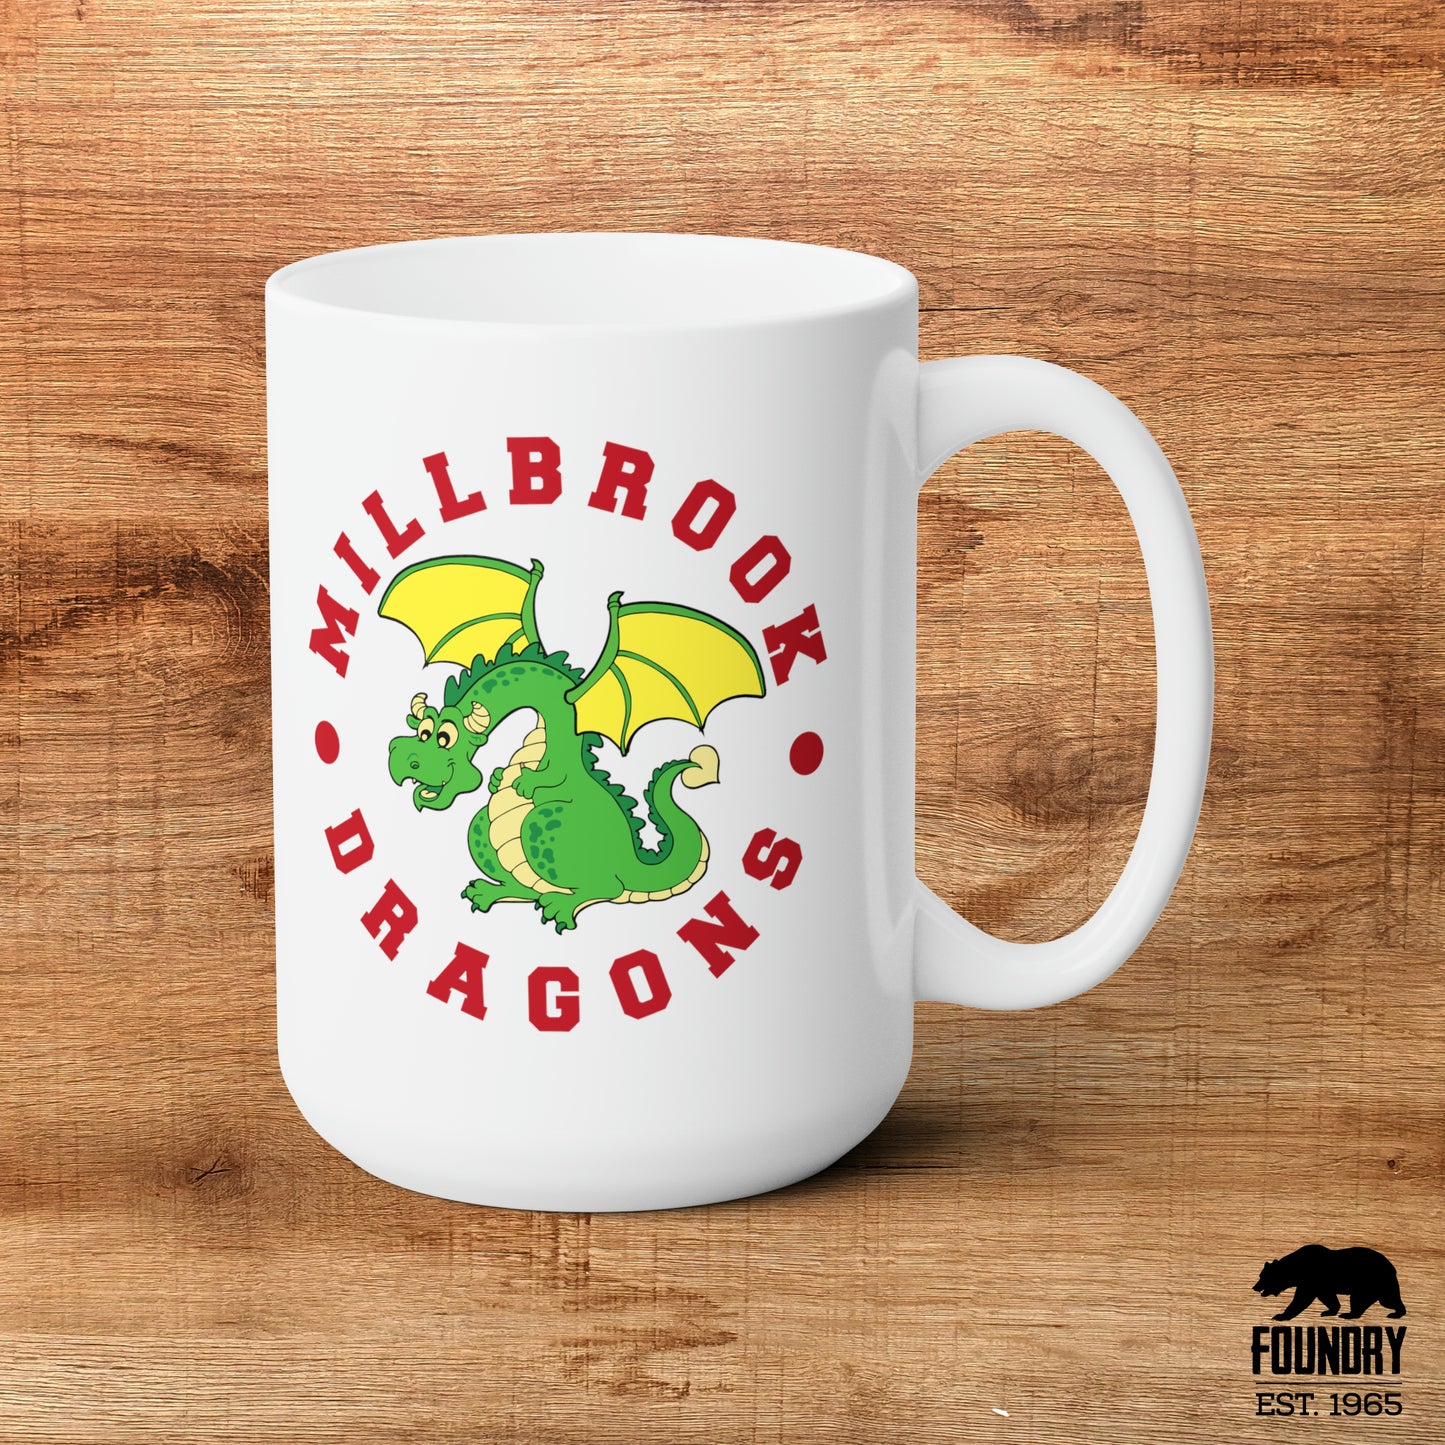 Millbrook Dragons Mascot - Ceramic Mug 15oz